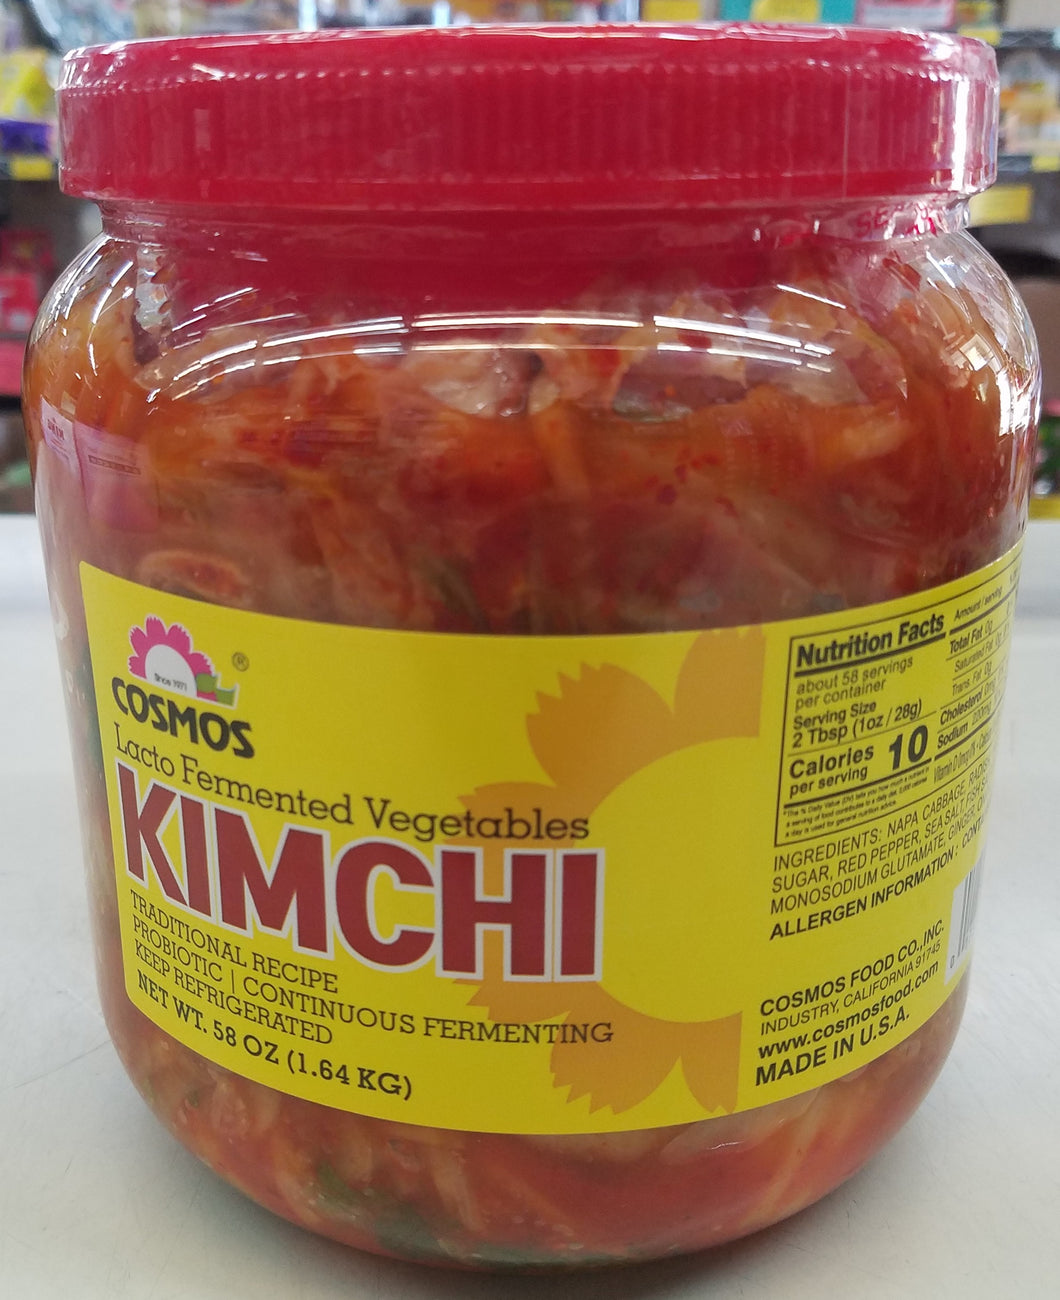 Cosmos Lacto Fermented Vegetables Kimchi 58oz